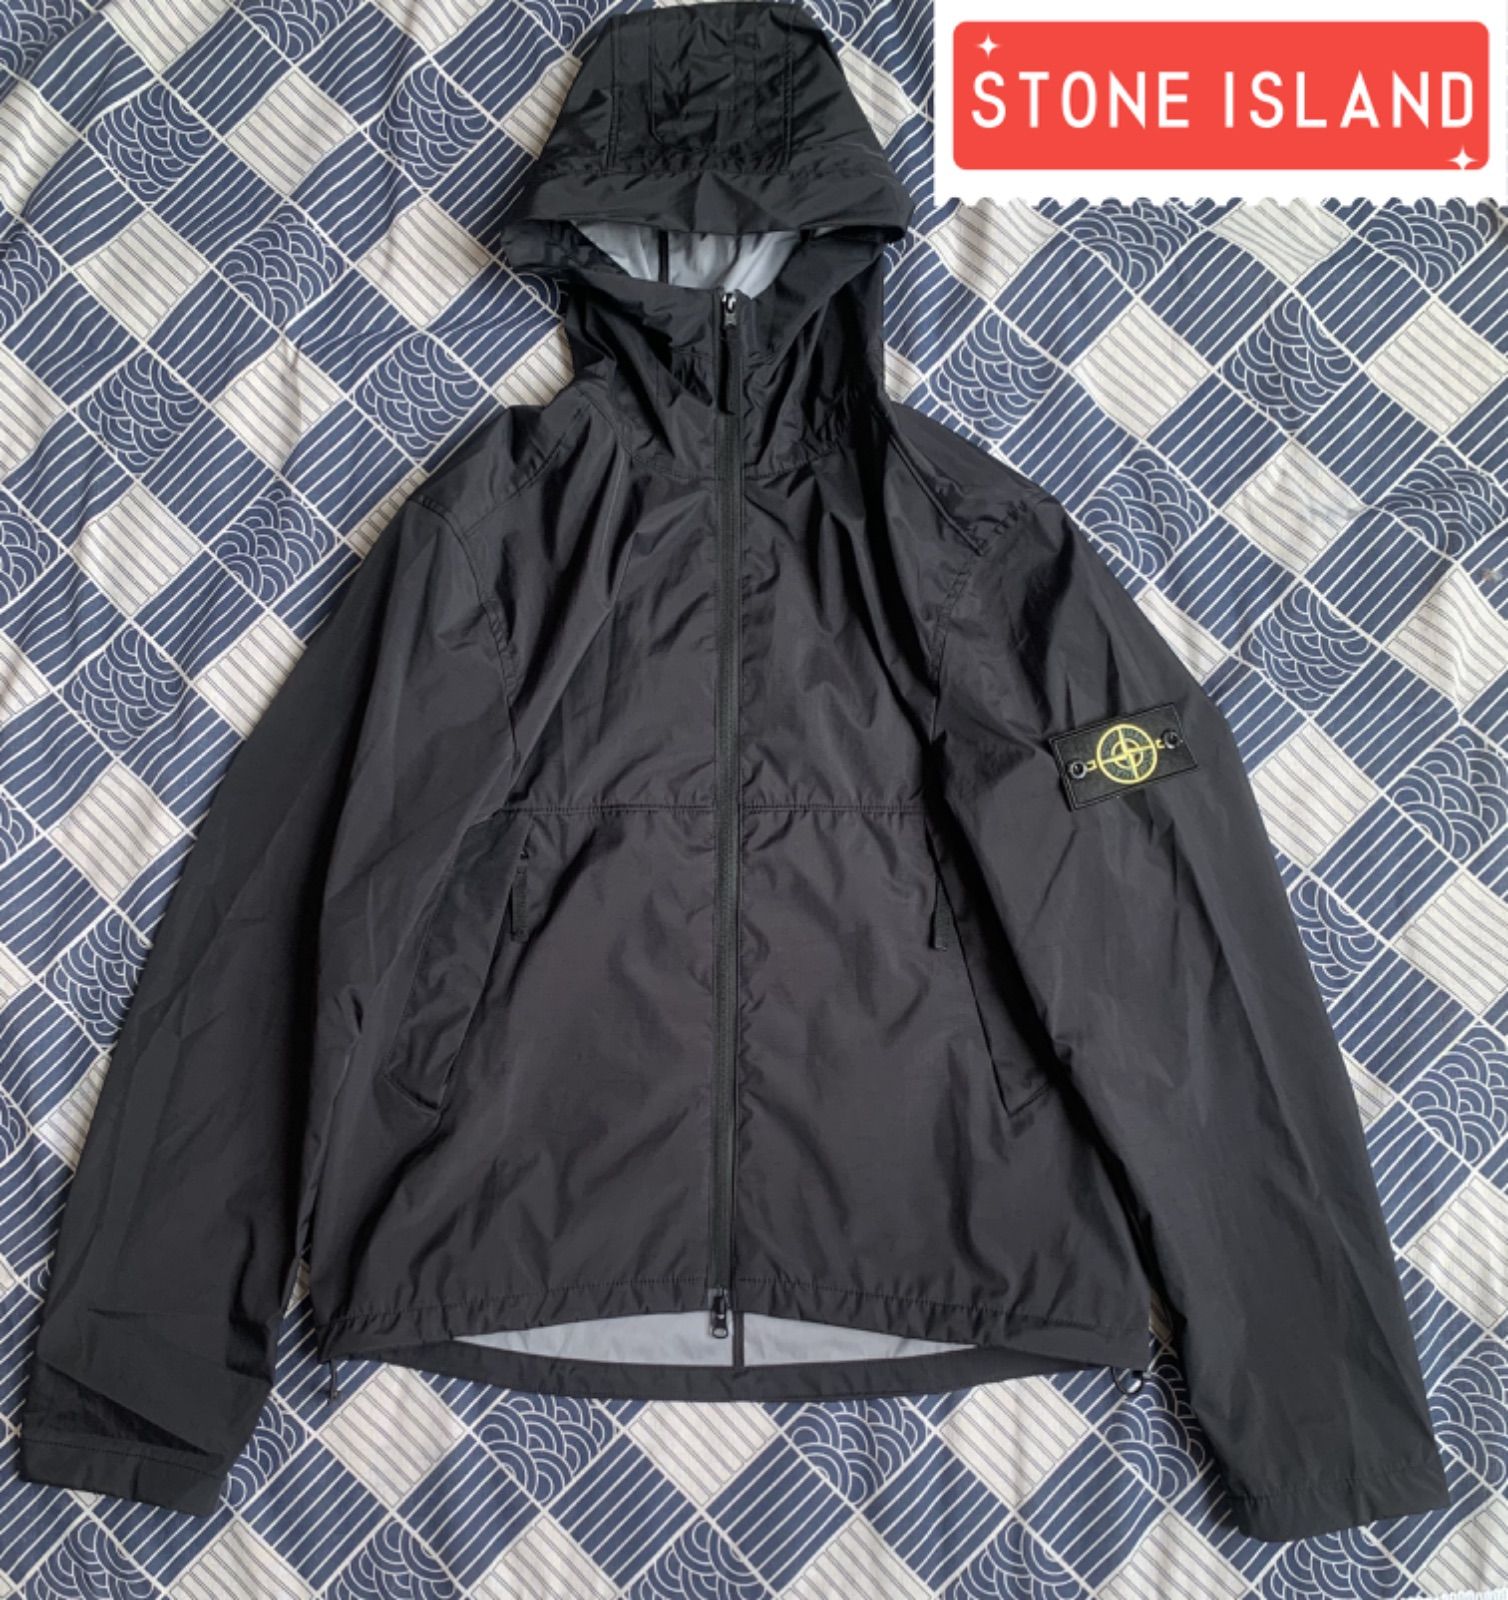 STONE ISLANDジャケット フード付きジャケット - メルカリ